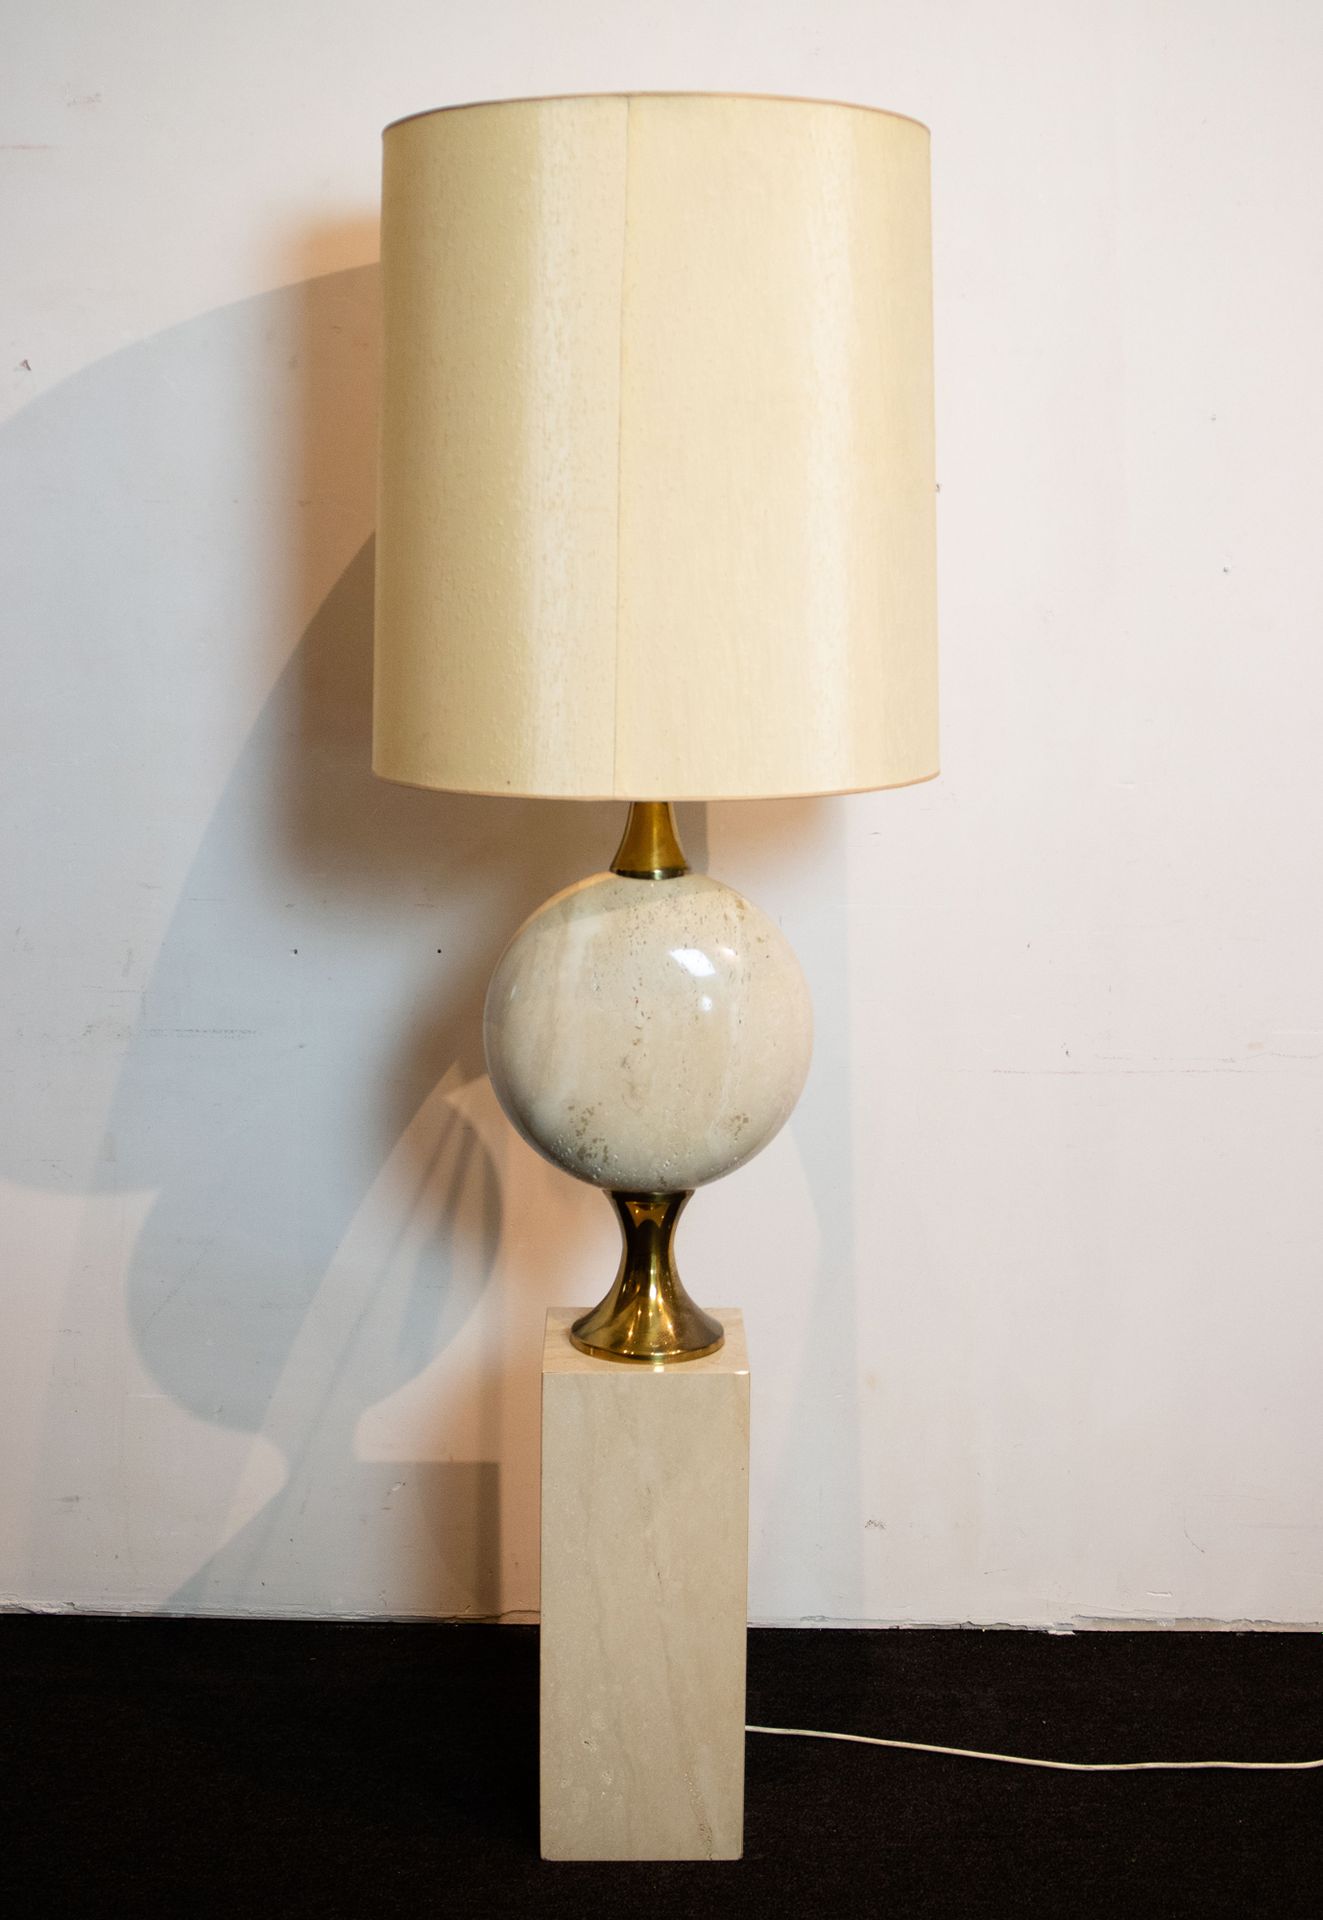 Null 大理石复古落地灯
大理石复古落地灯 Een vintage marmeren vloerlamp。高165厘米
高165厘米